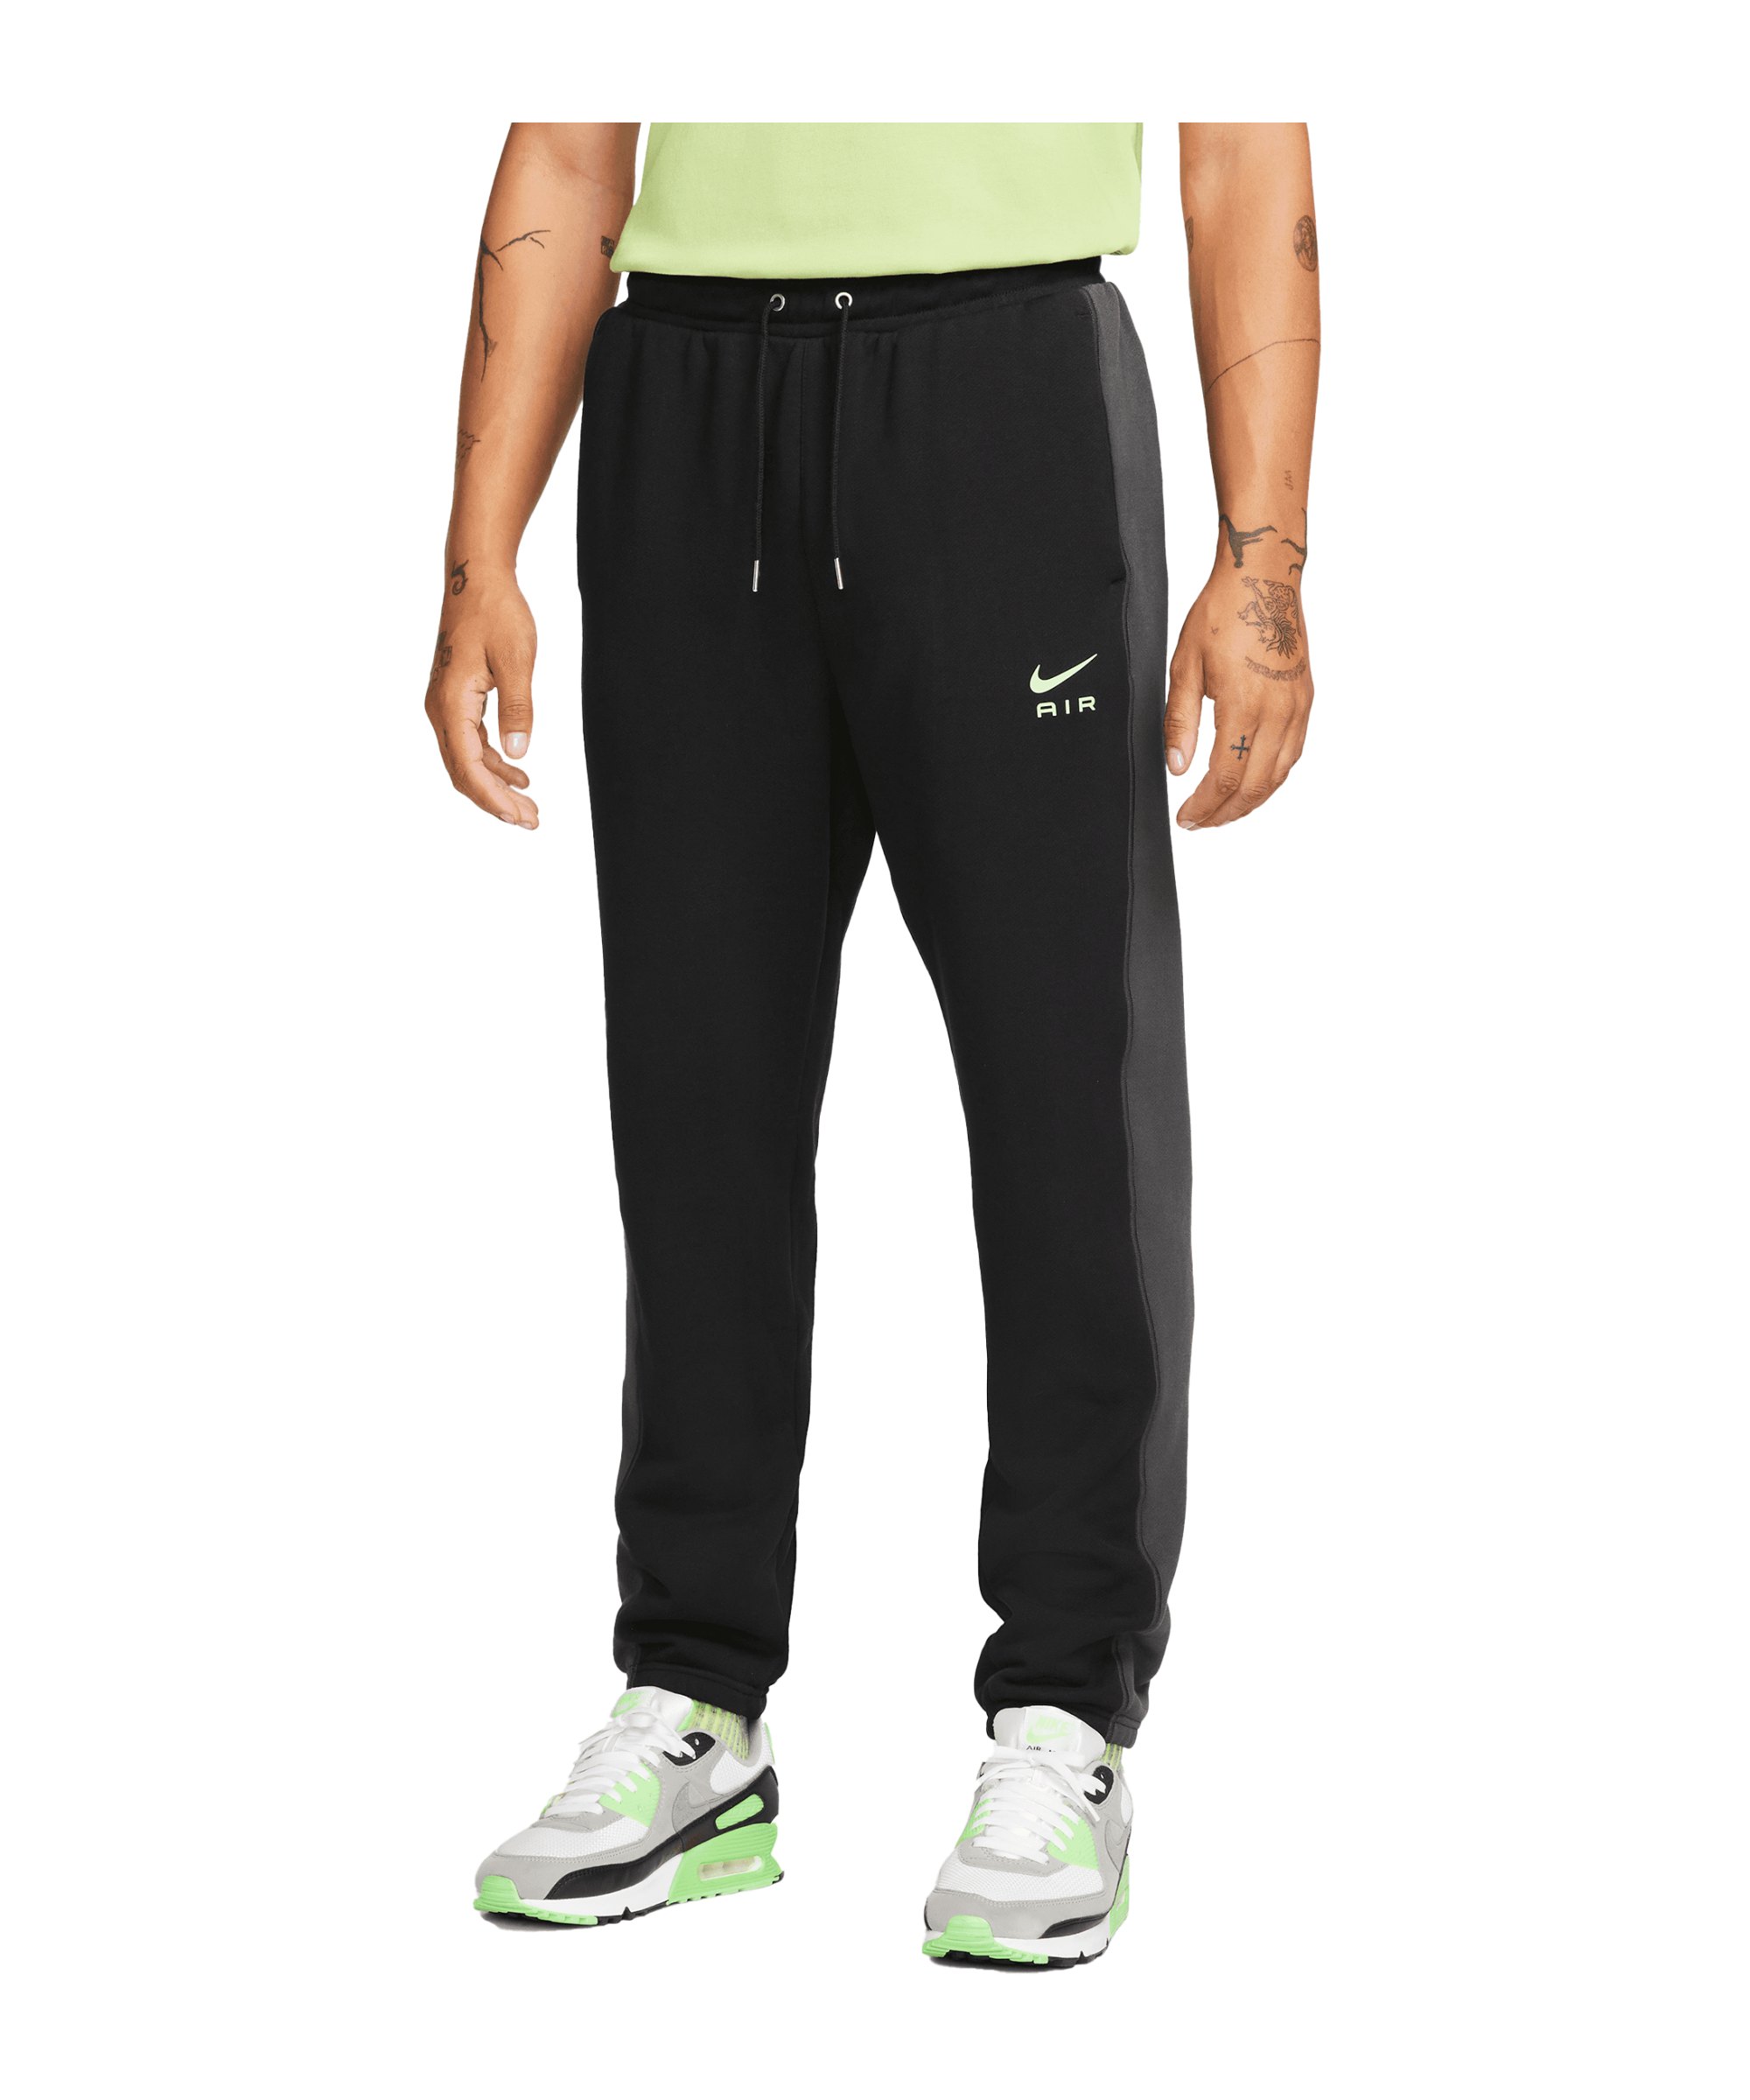 Nike Air FT Jogginghose Schwarz Grau Grün F011 - schwarz